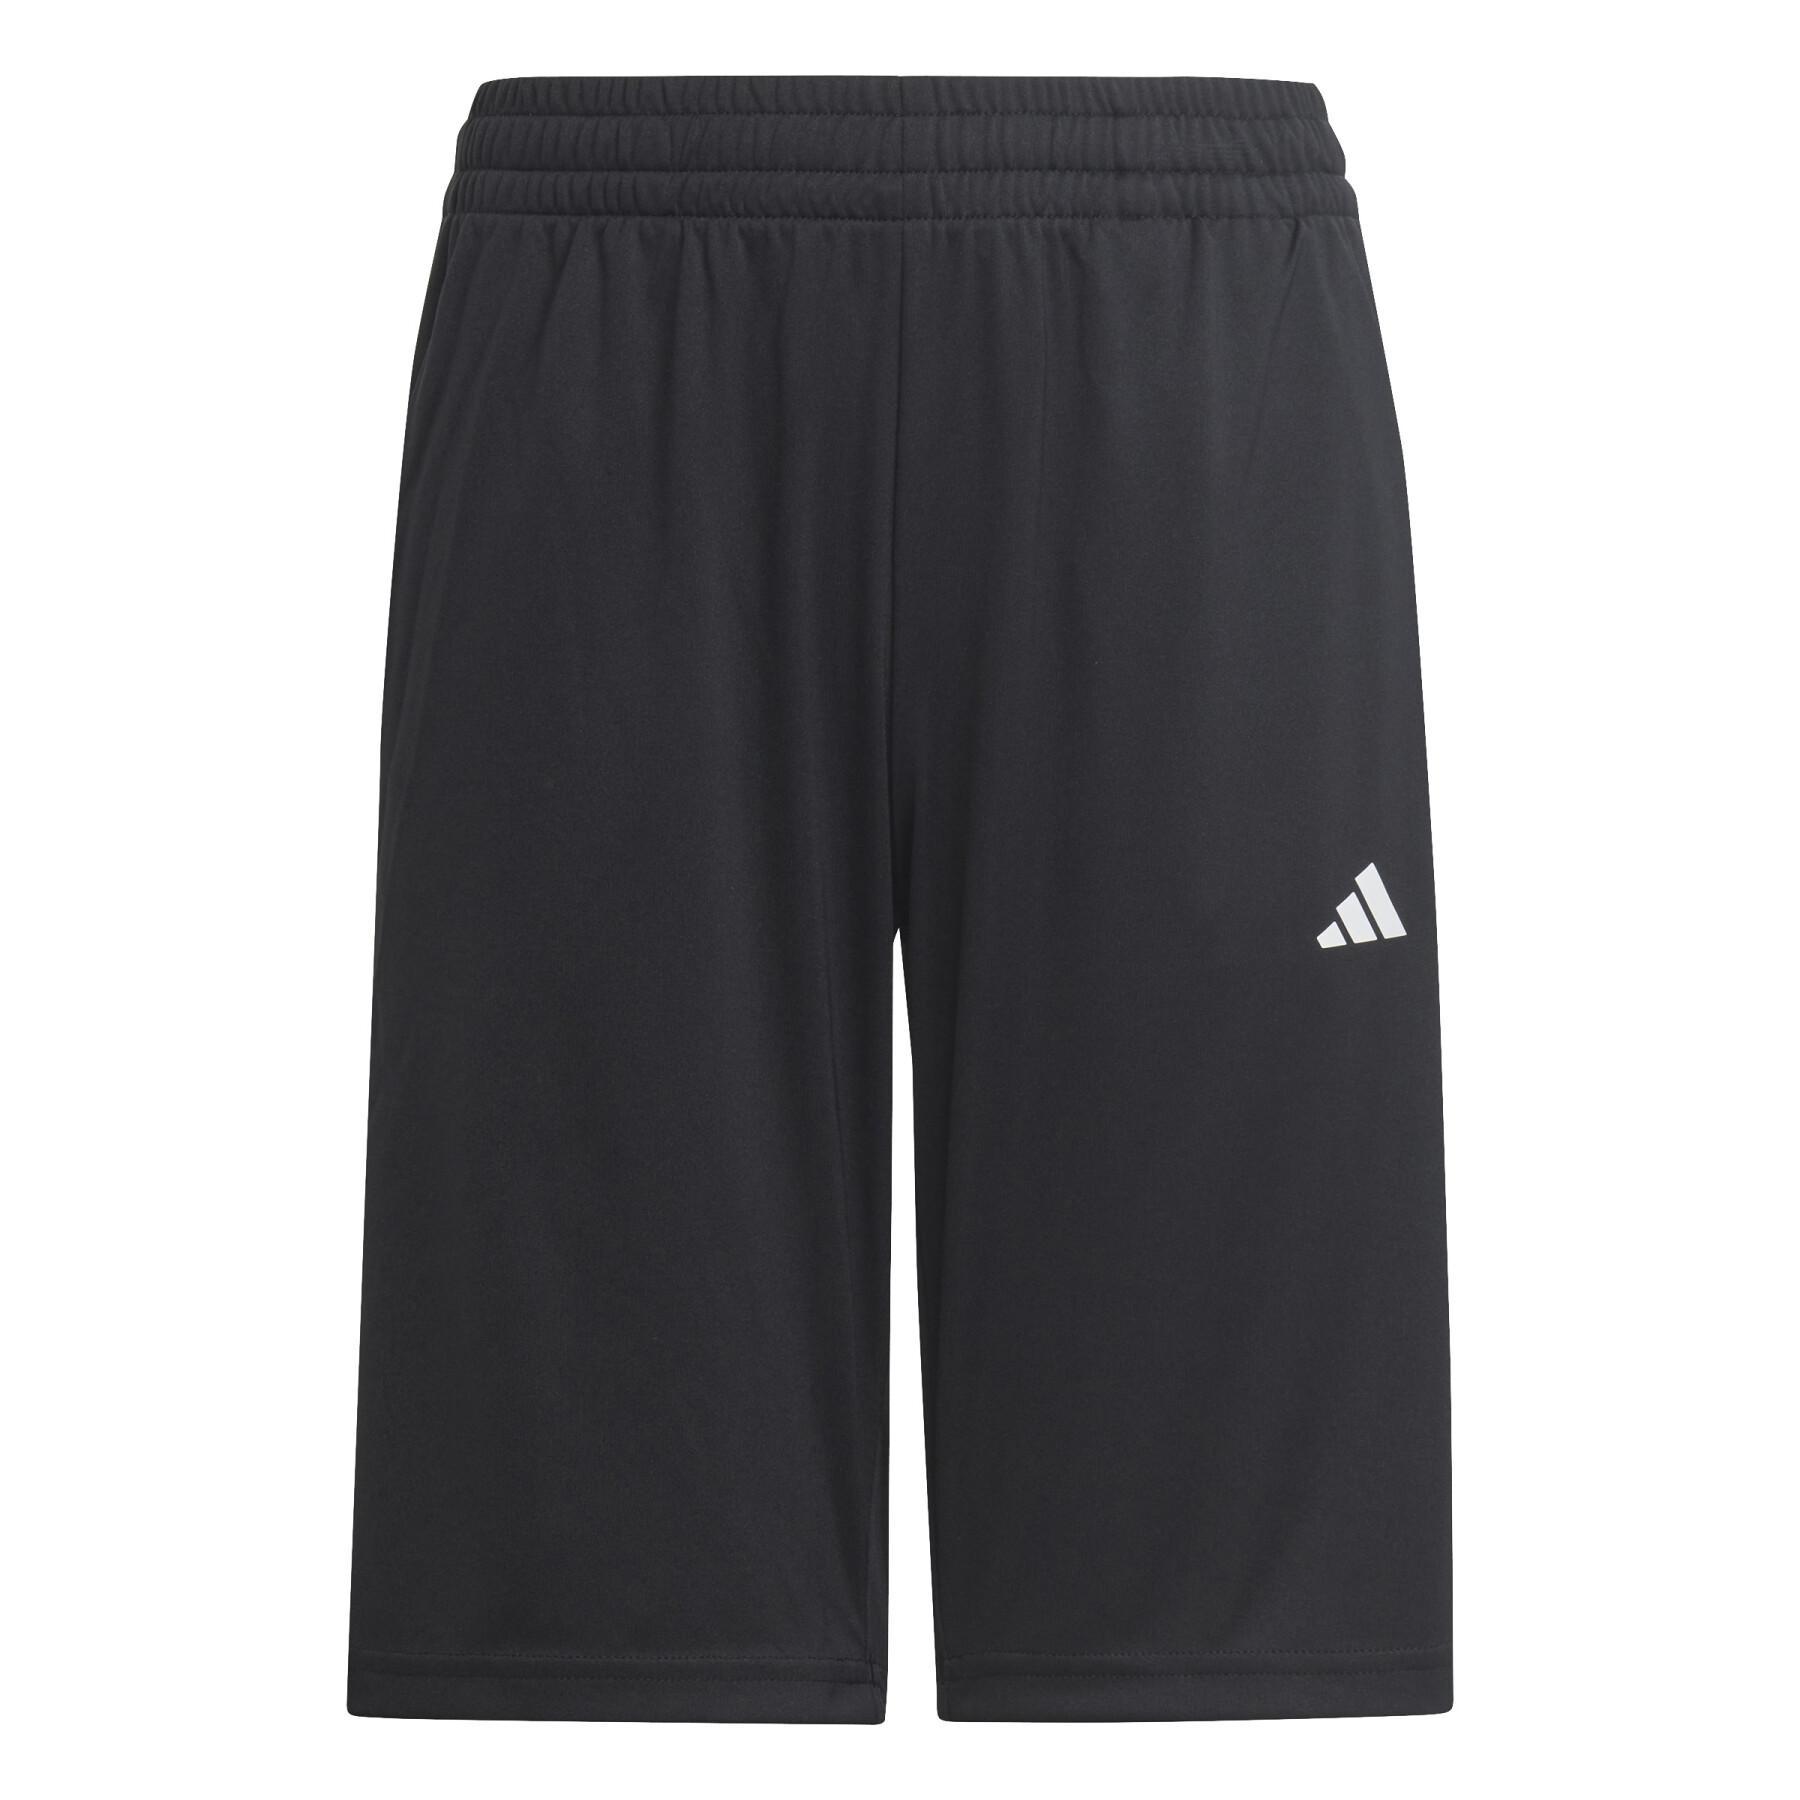 Kids jersey and shorts set adidas 3-Stripes Essentials Aeroready